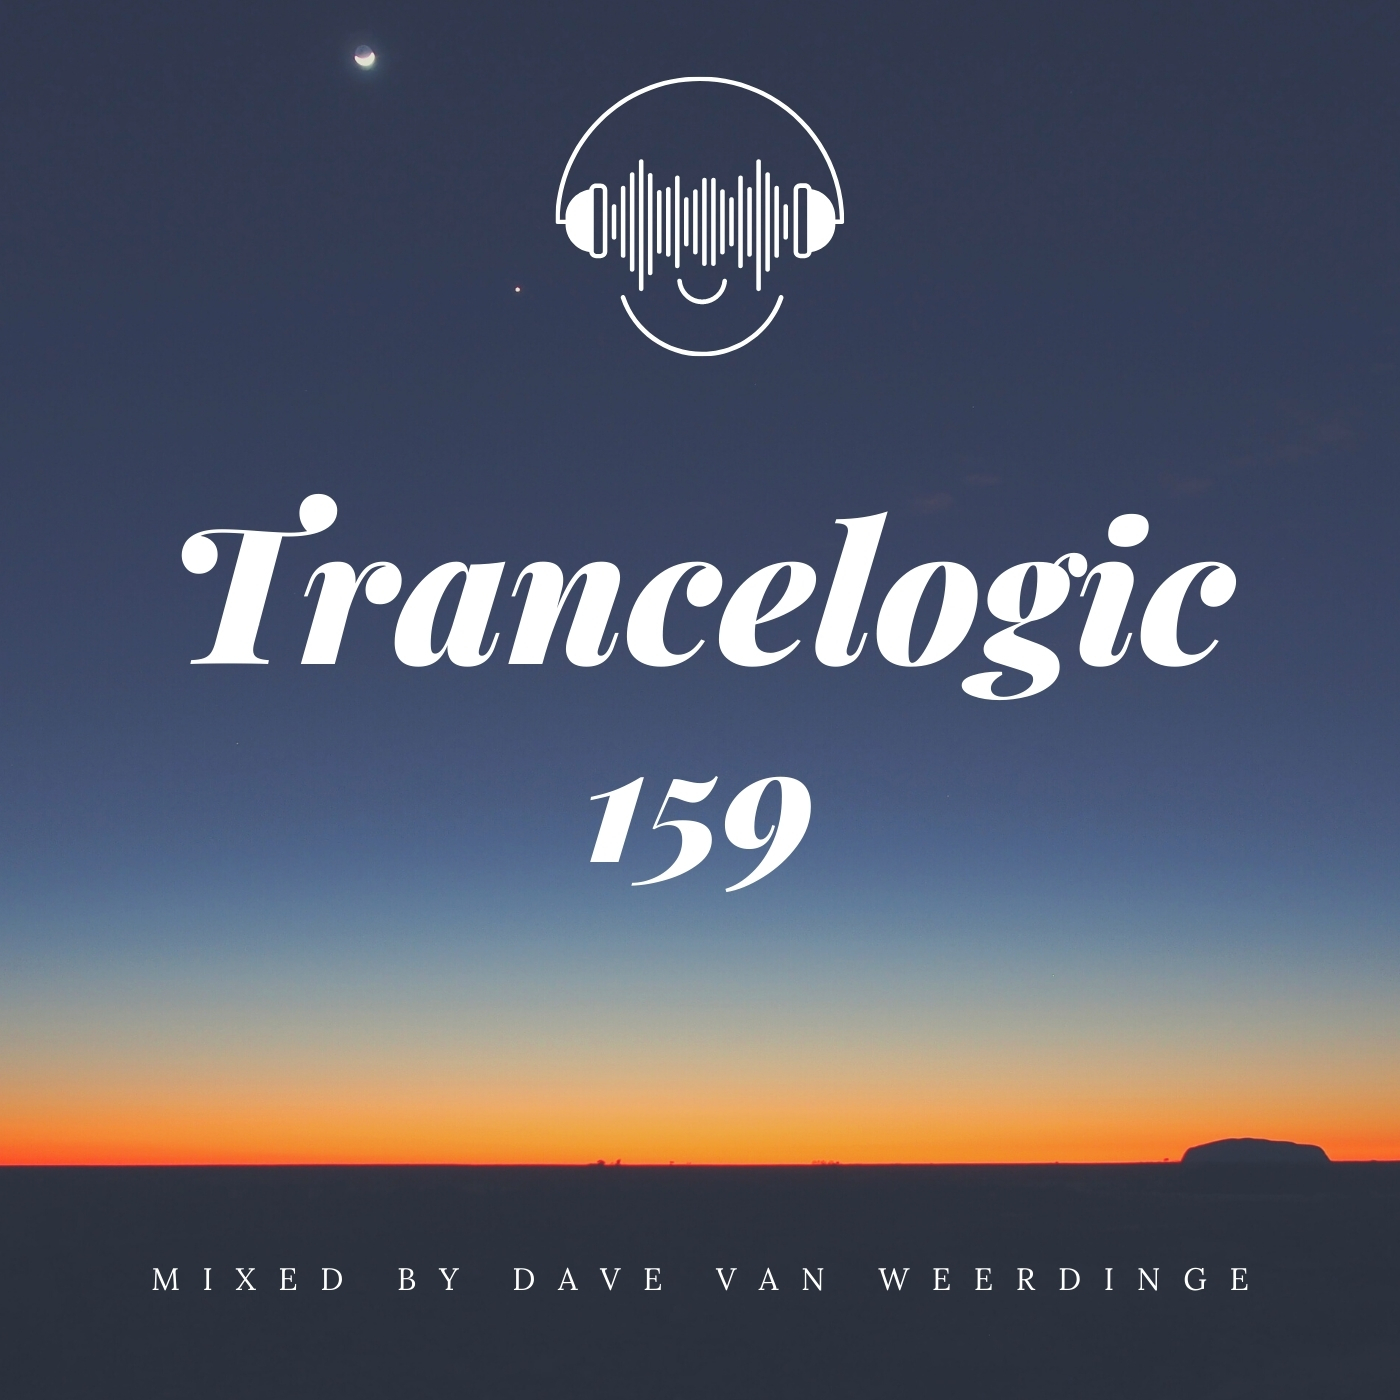 Trancelogic 159 by Dave van Weerdinge